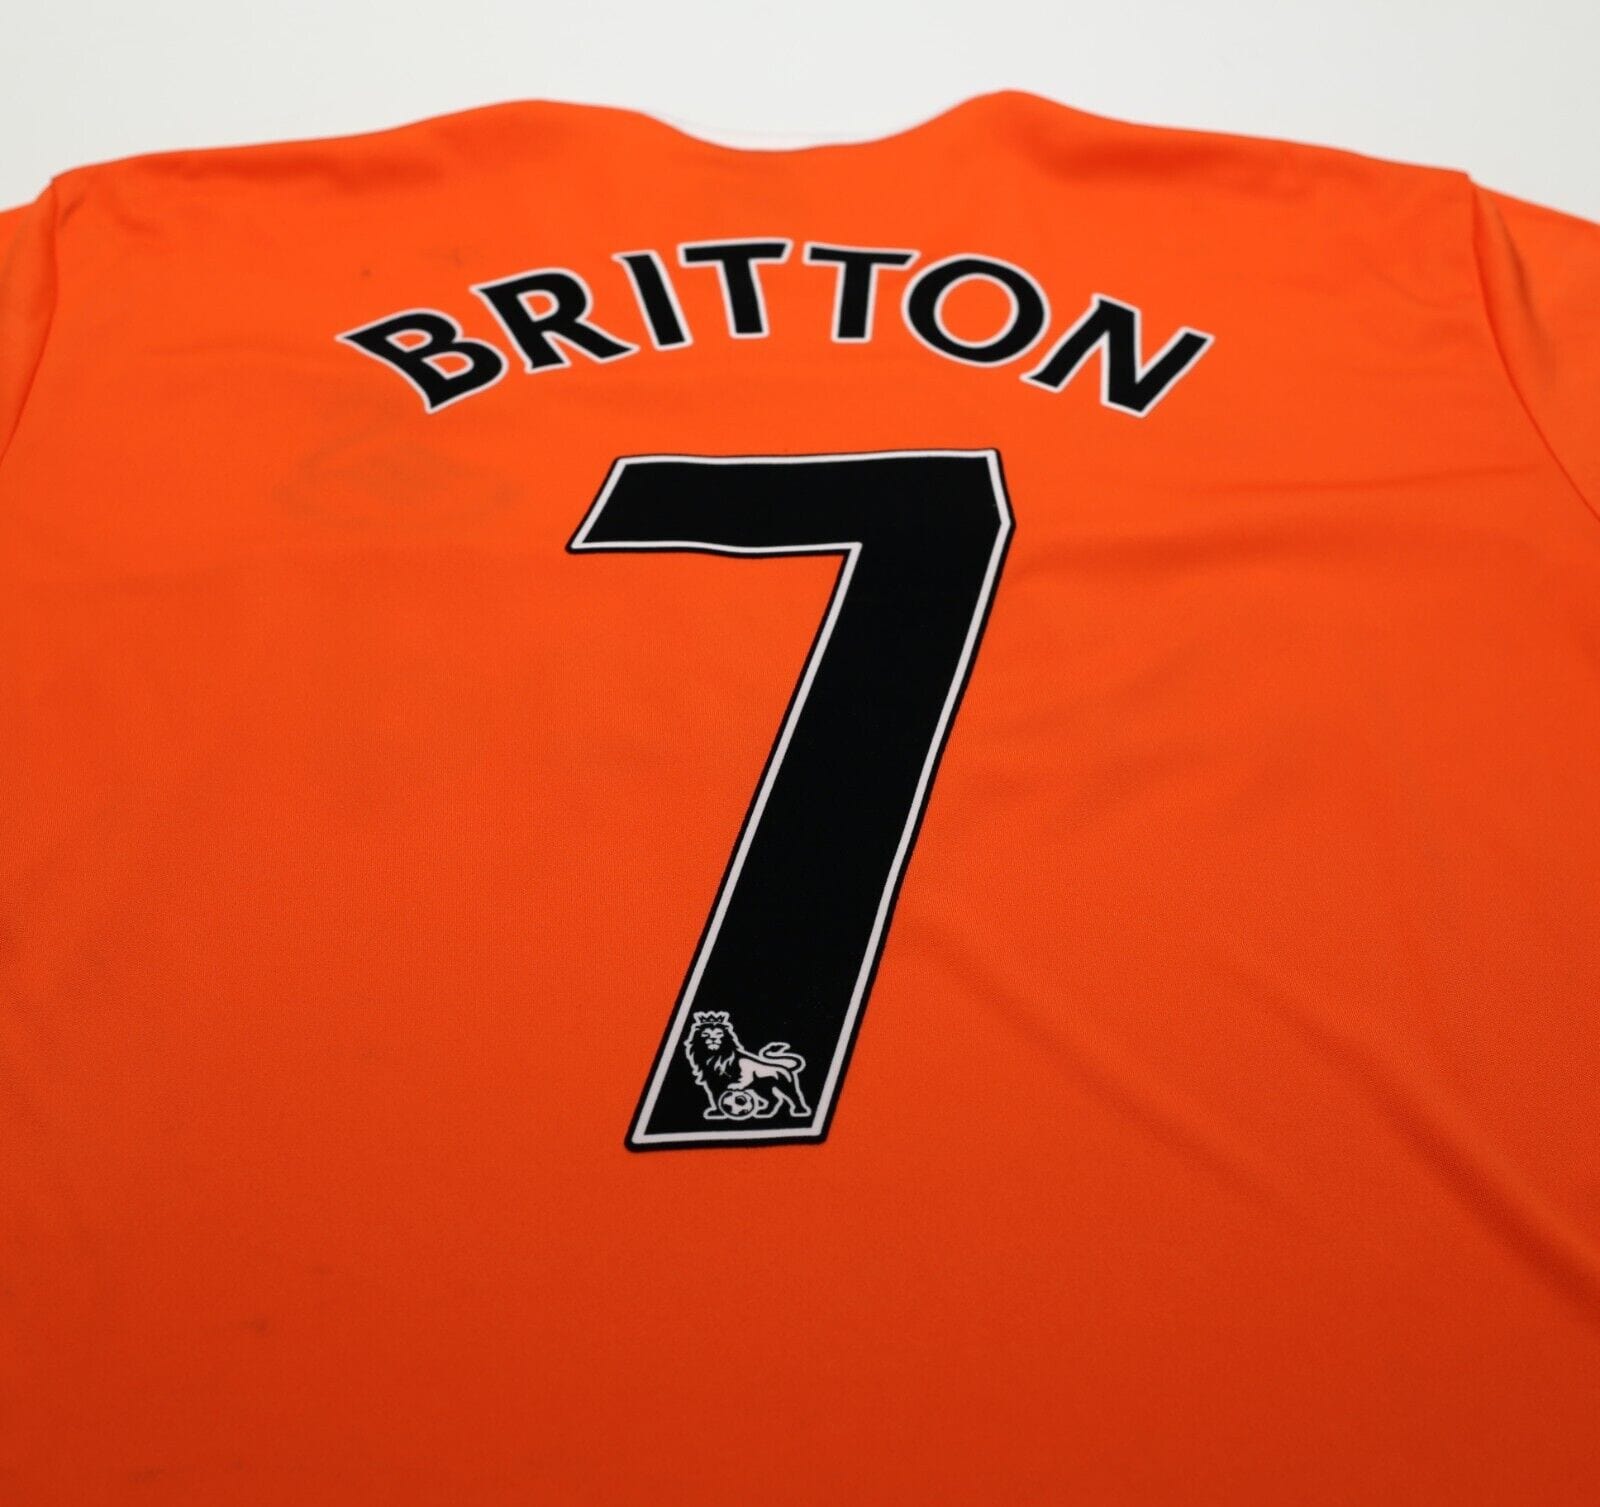 2011/12 BRITTON #7 Swansea City Vintage adidas Away Football Shirt (S)